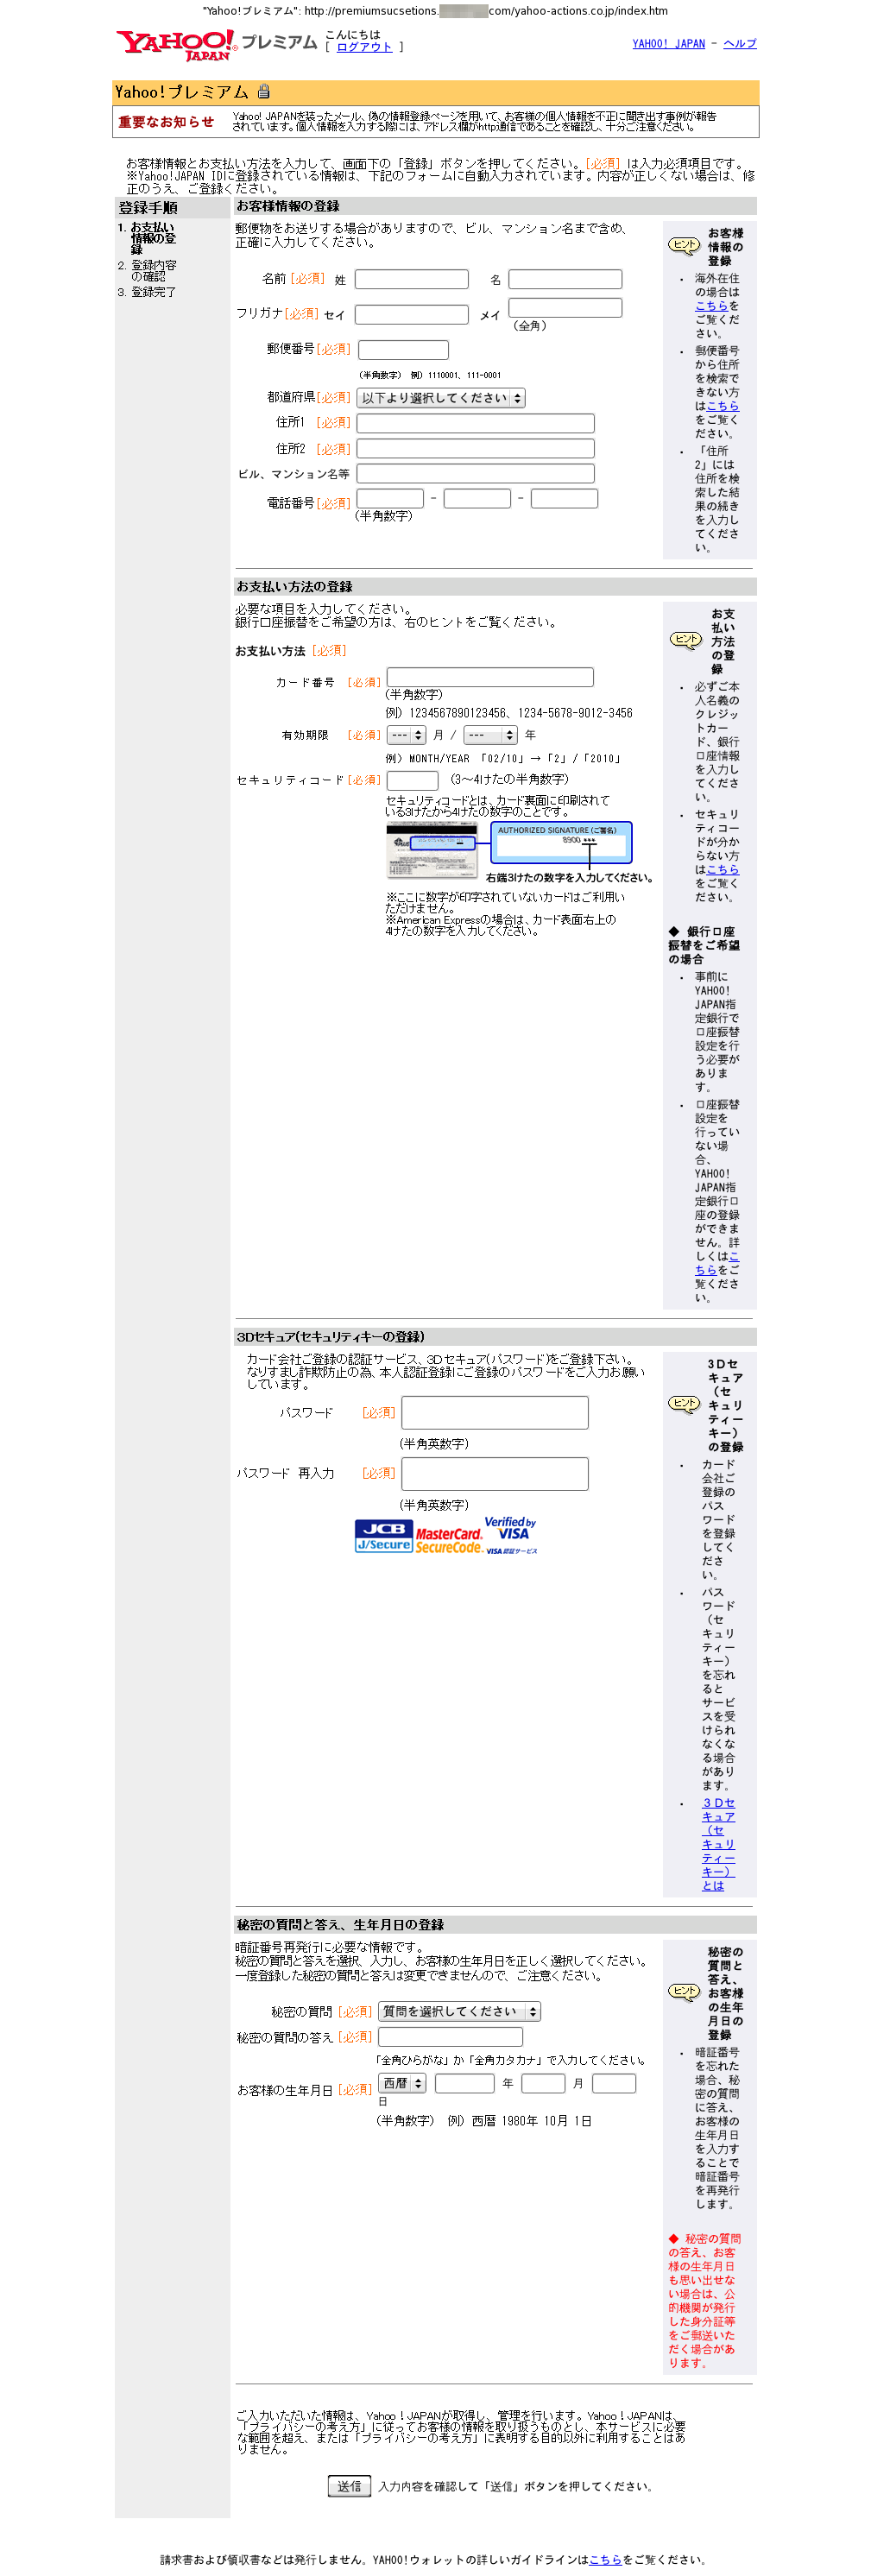 Yahoo! JAPANをかたるフィッシング(2009/7/22)